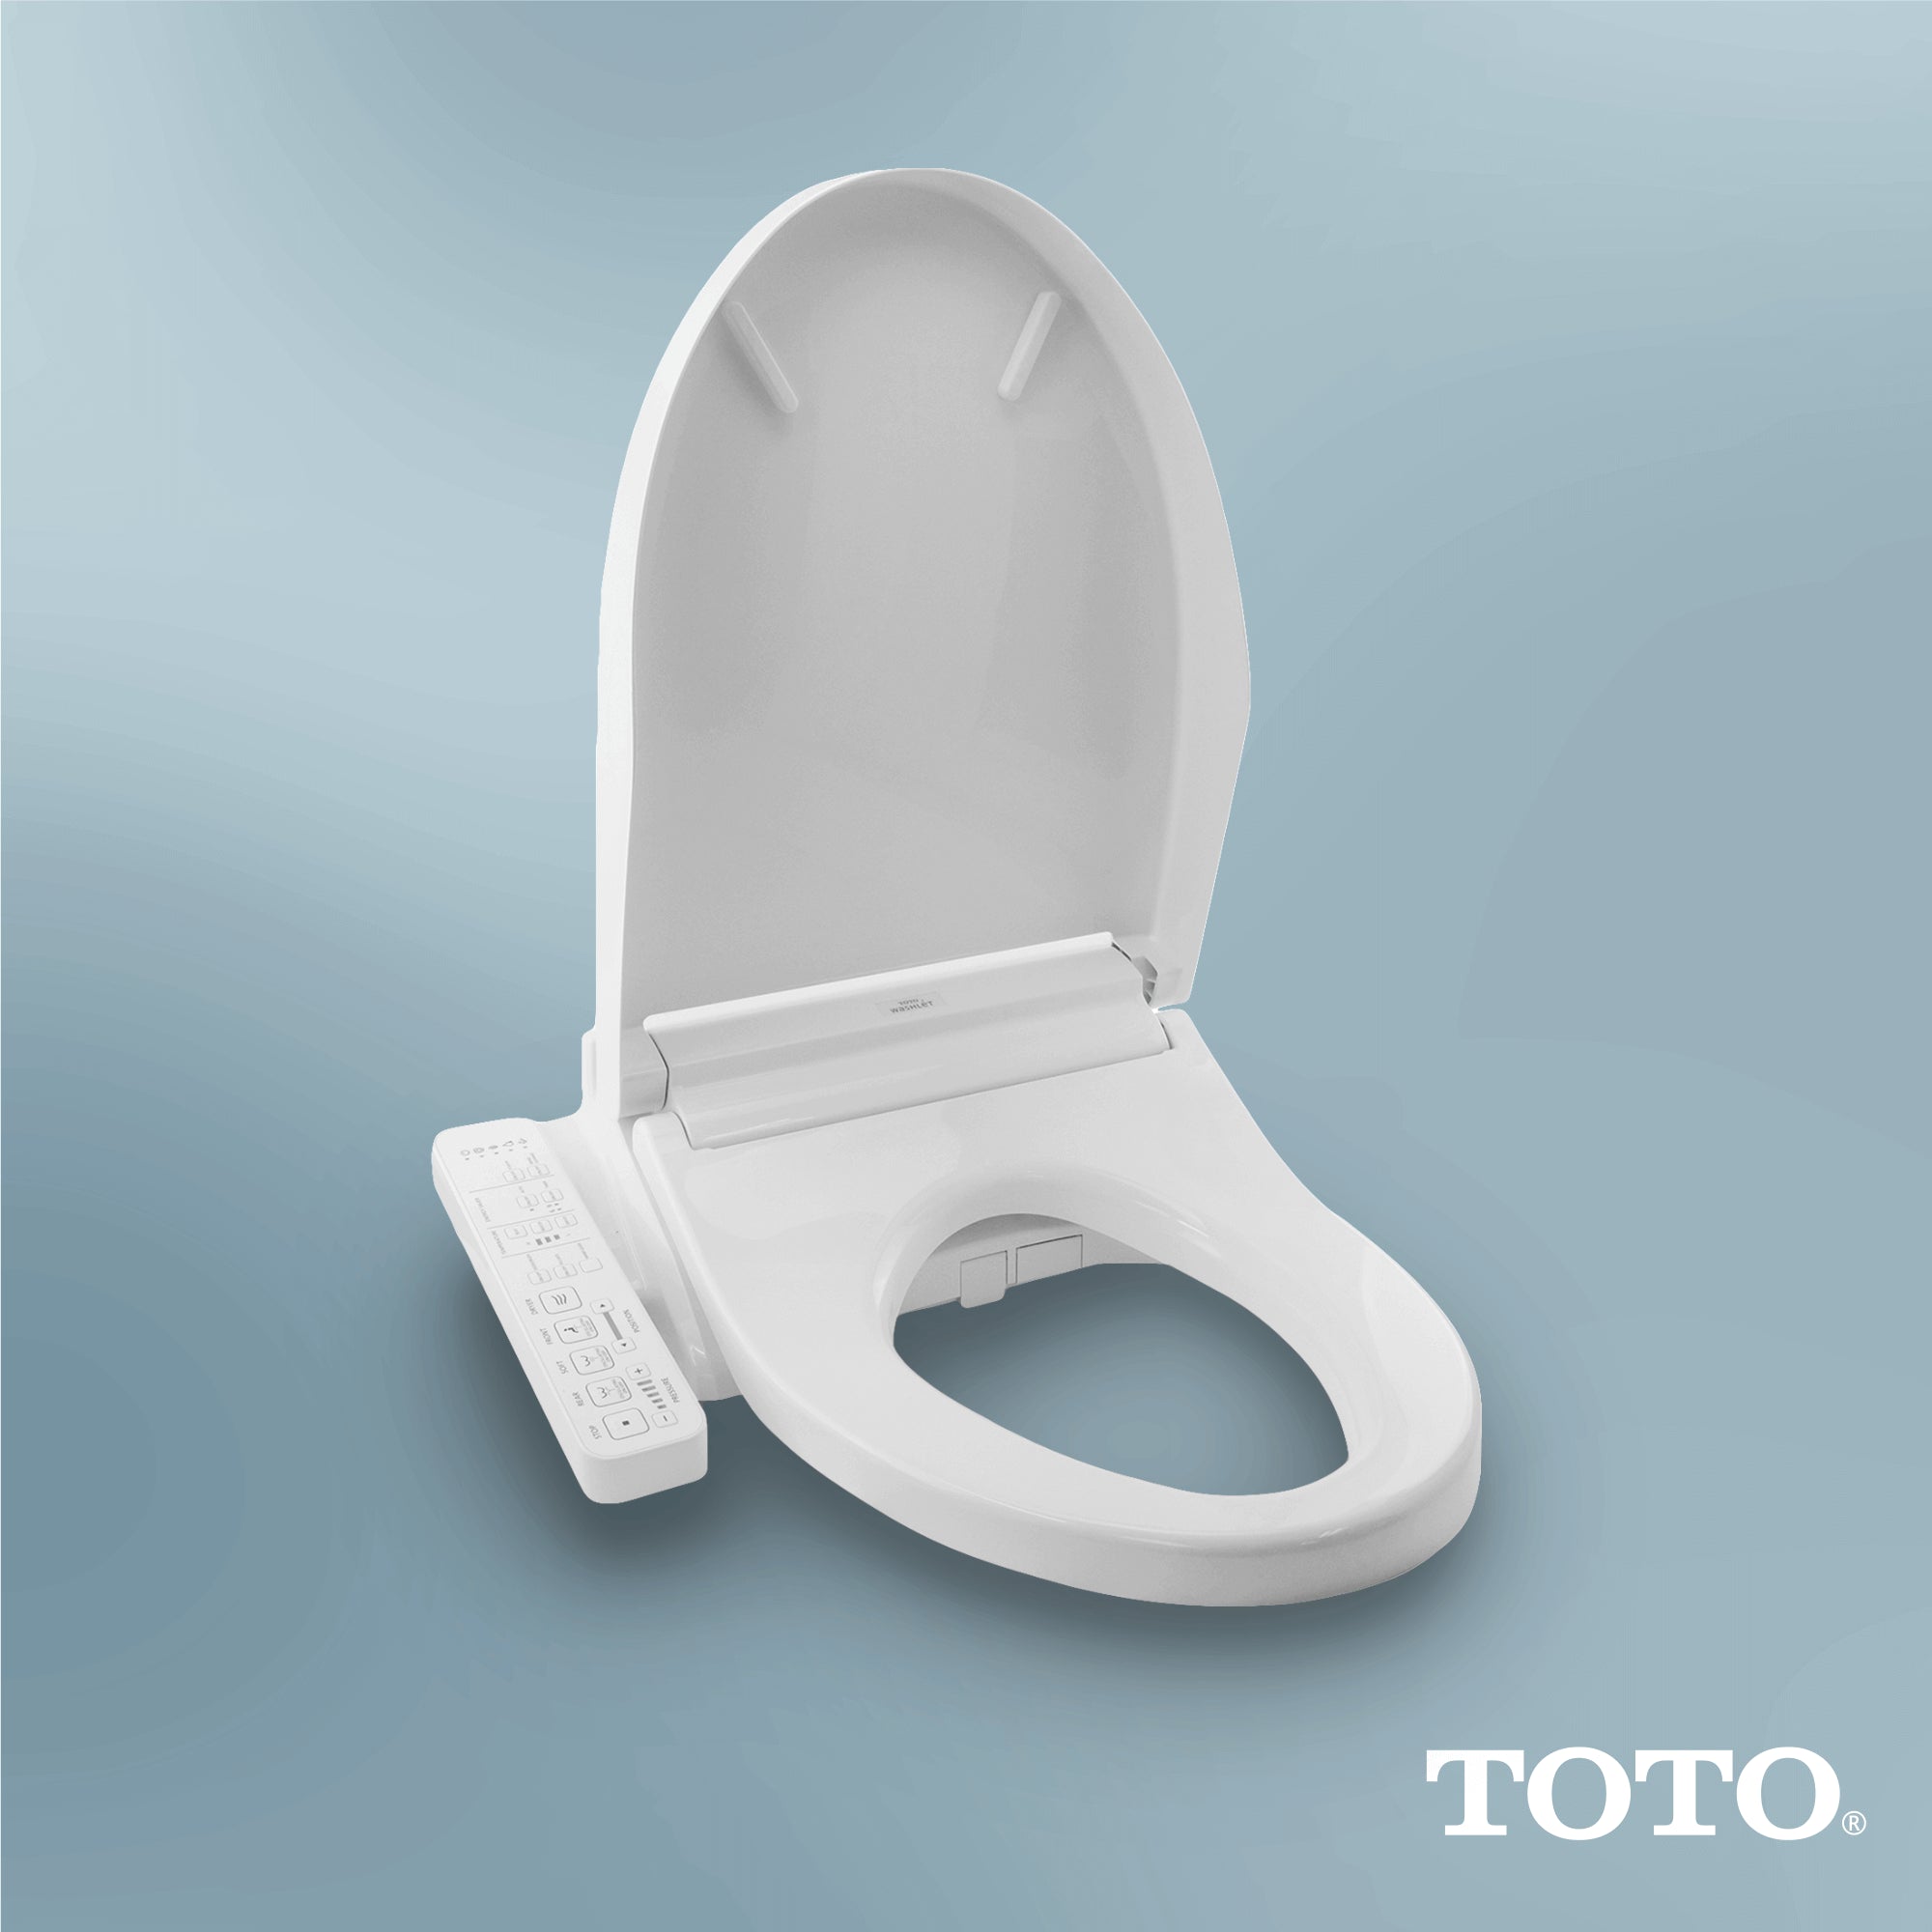 TOTO WASHLET C2 Bidet Toilet Round Seat with Side Panel Controls - SW3073#01